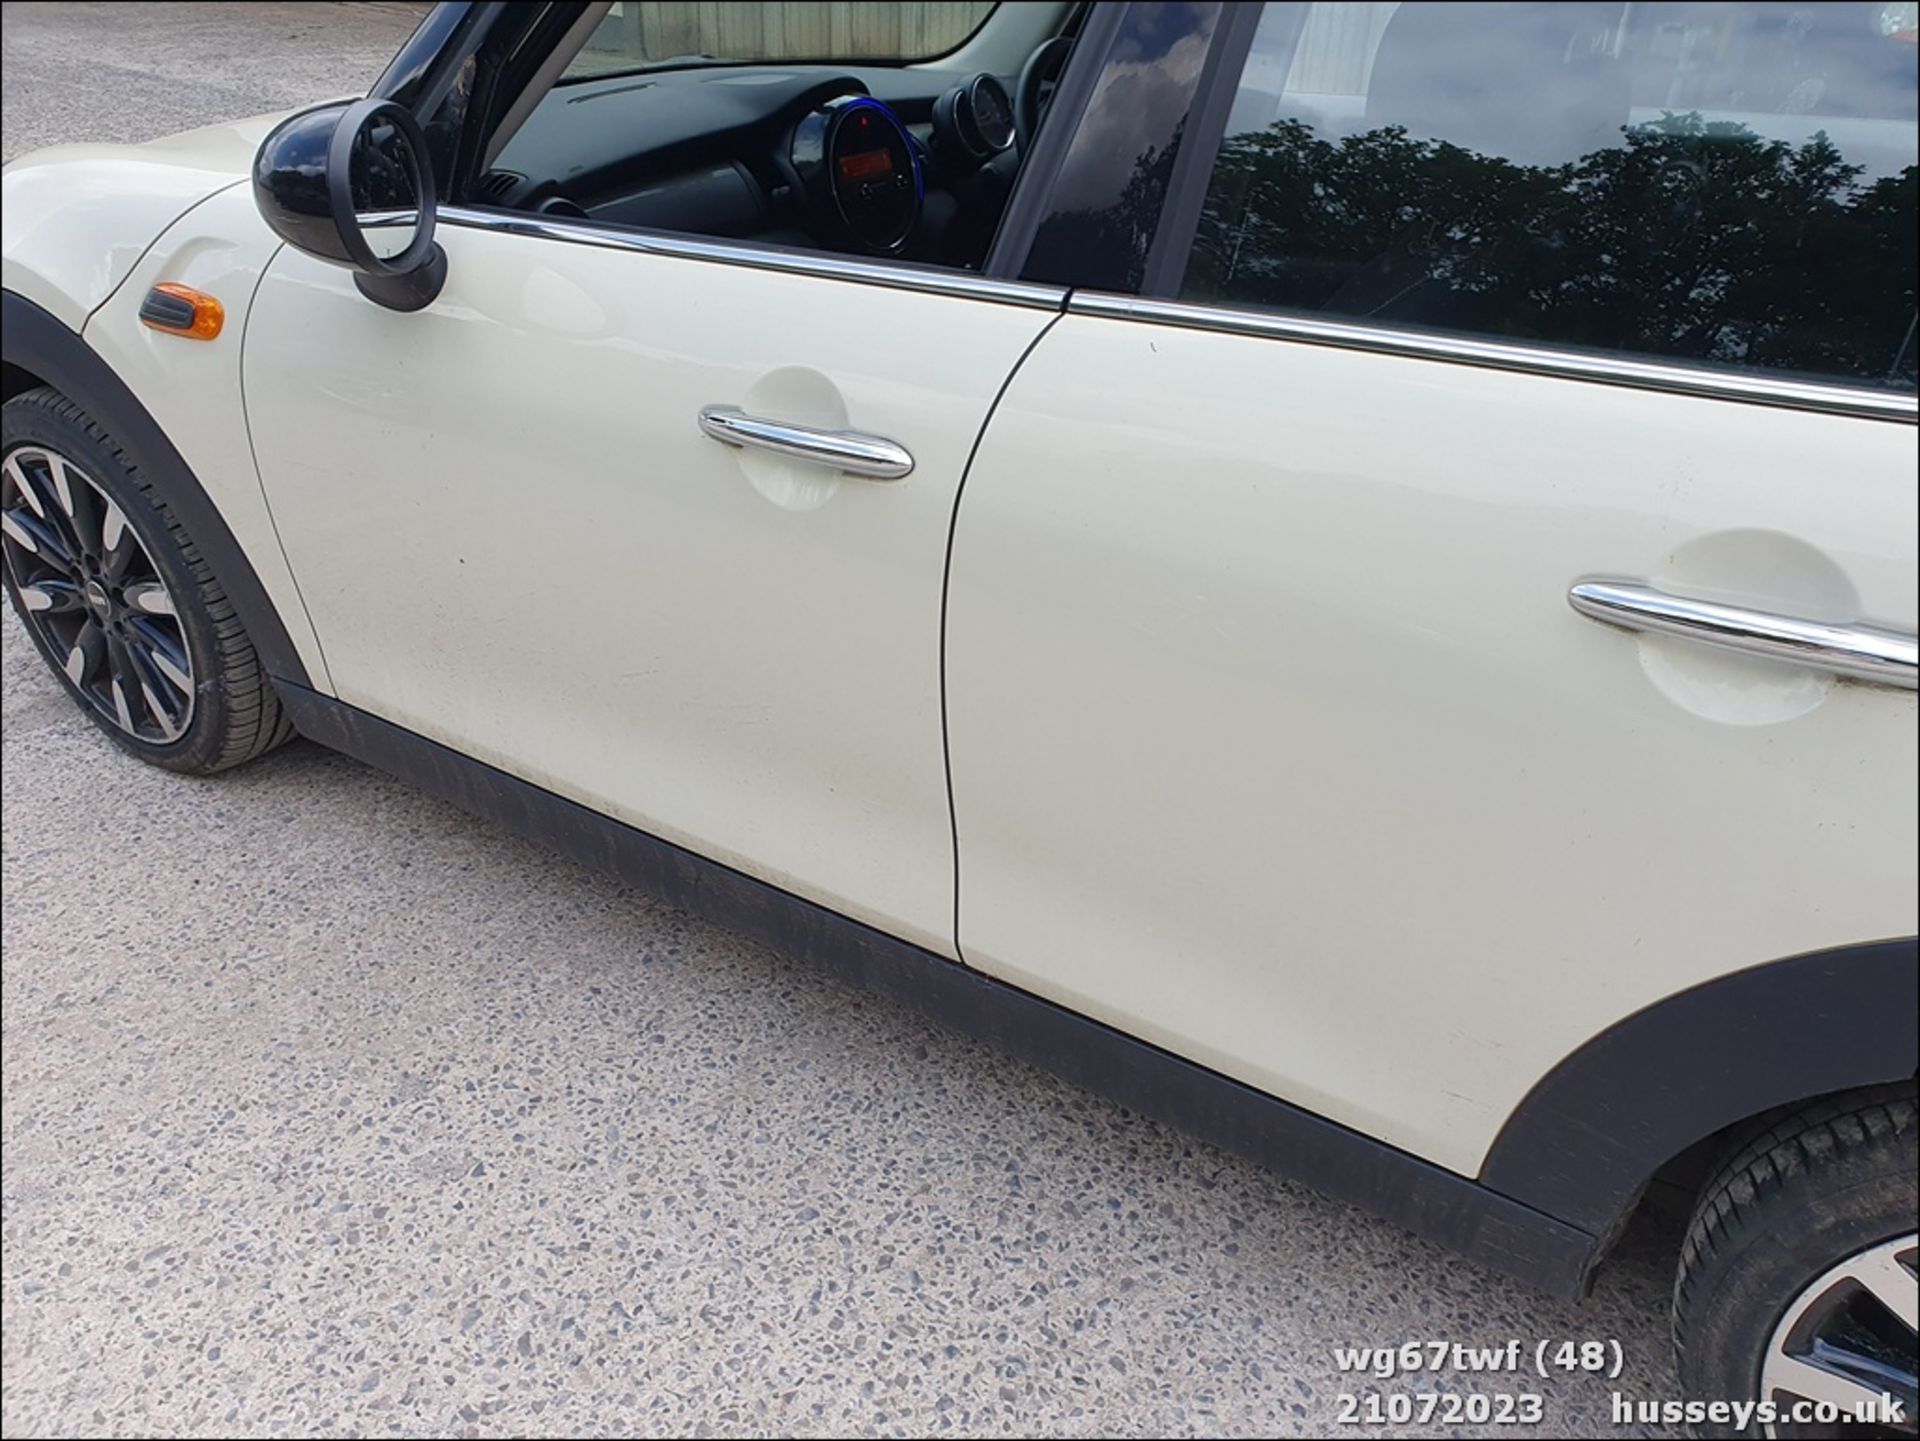 17/67 MINI COOPER AUTO - 1499cc 5dr Hatchback (White, 8k) - Image 48 of 60